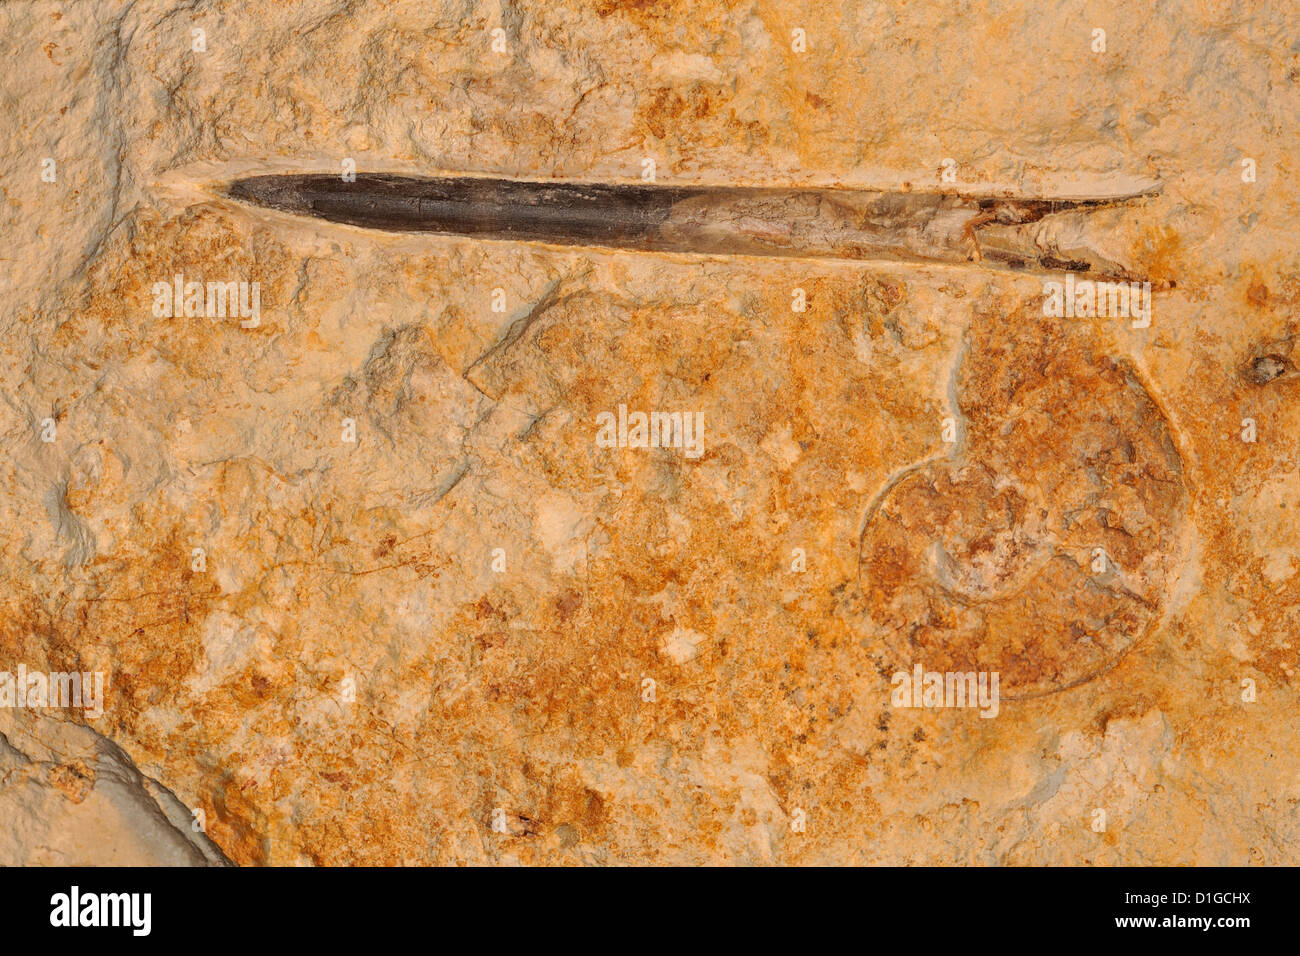 Fossilen Tintenfisch Gladius, Architeuthidae, Mollusken Kopffüßer Stockfoto